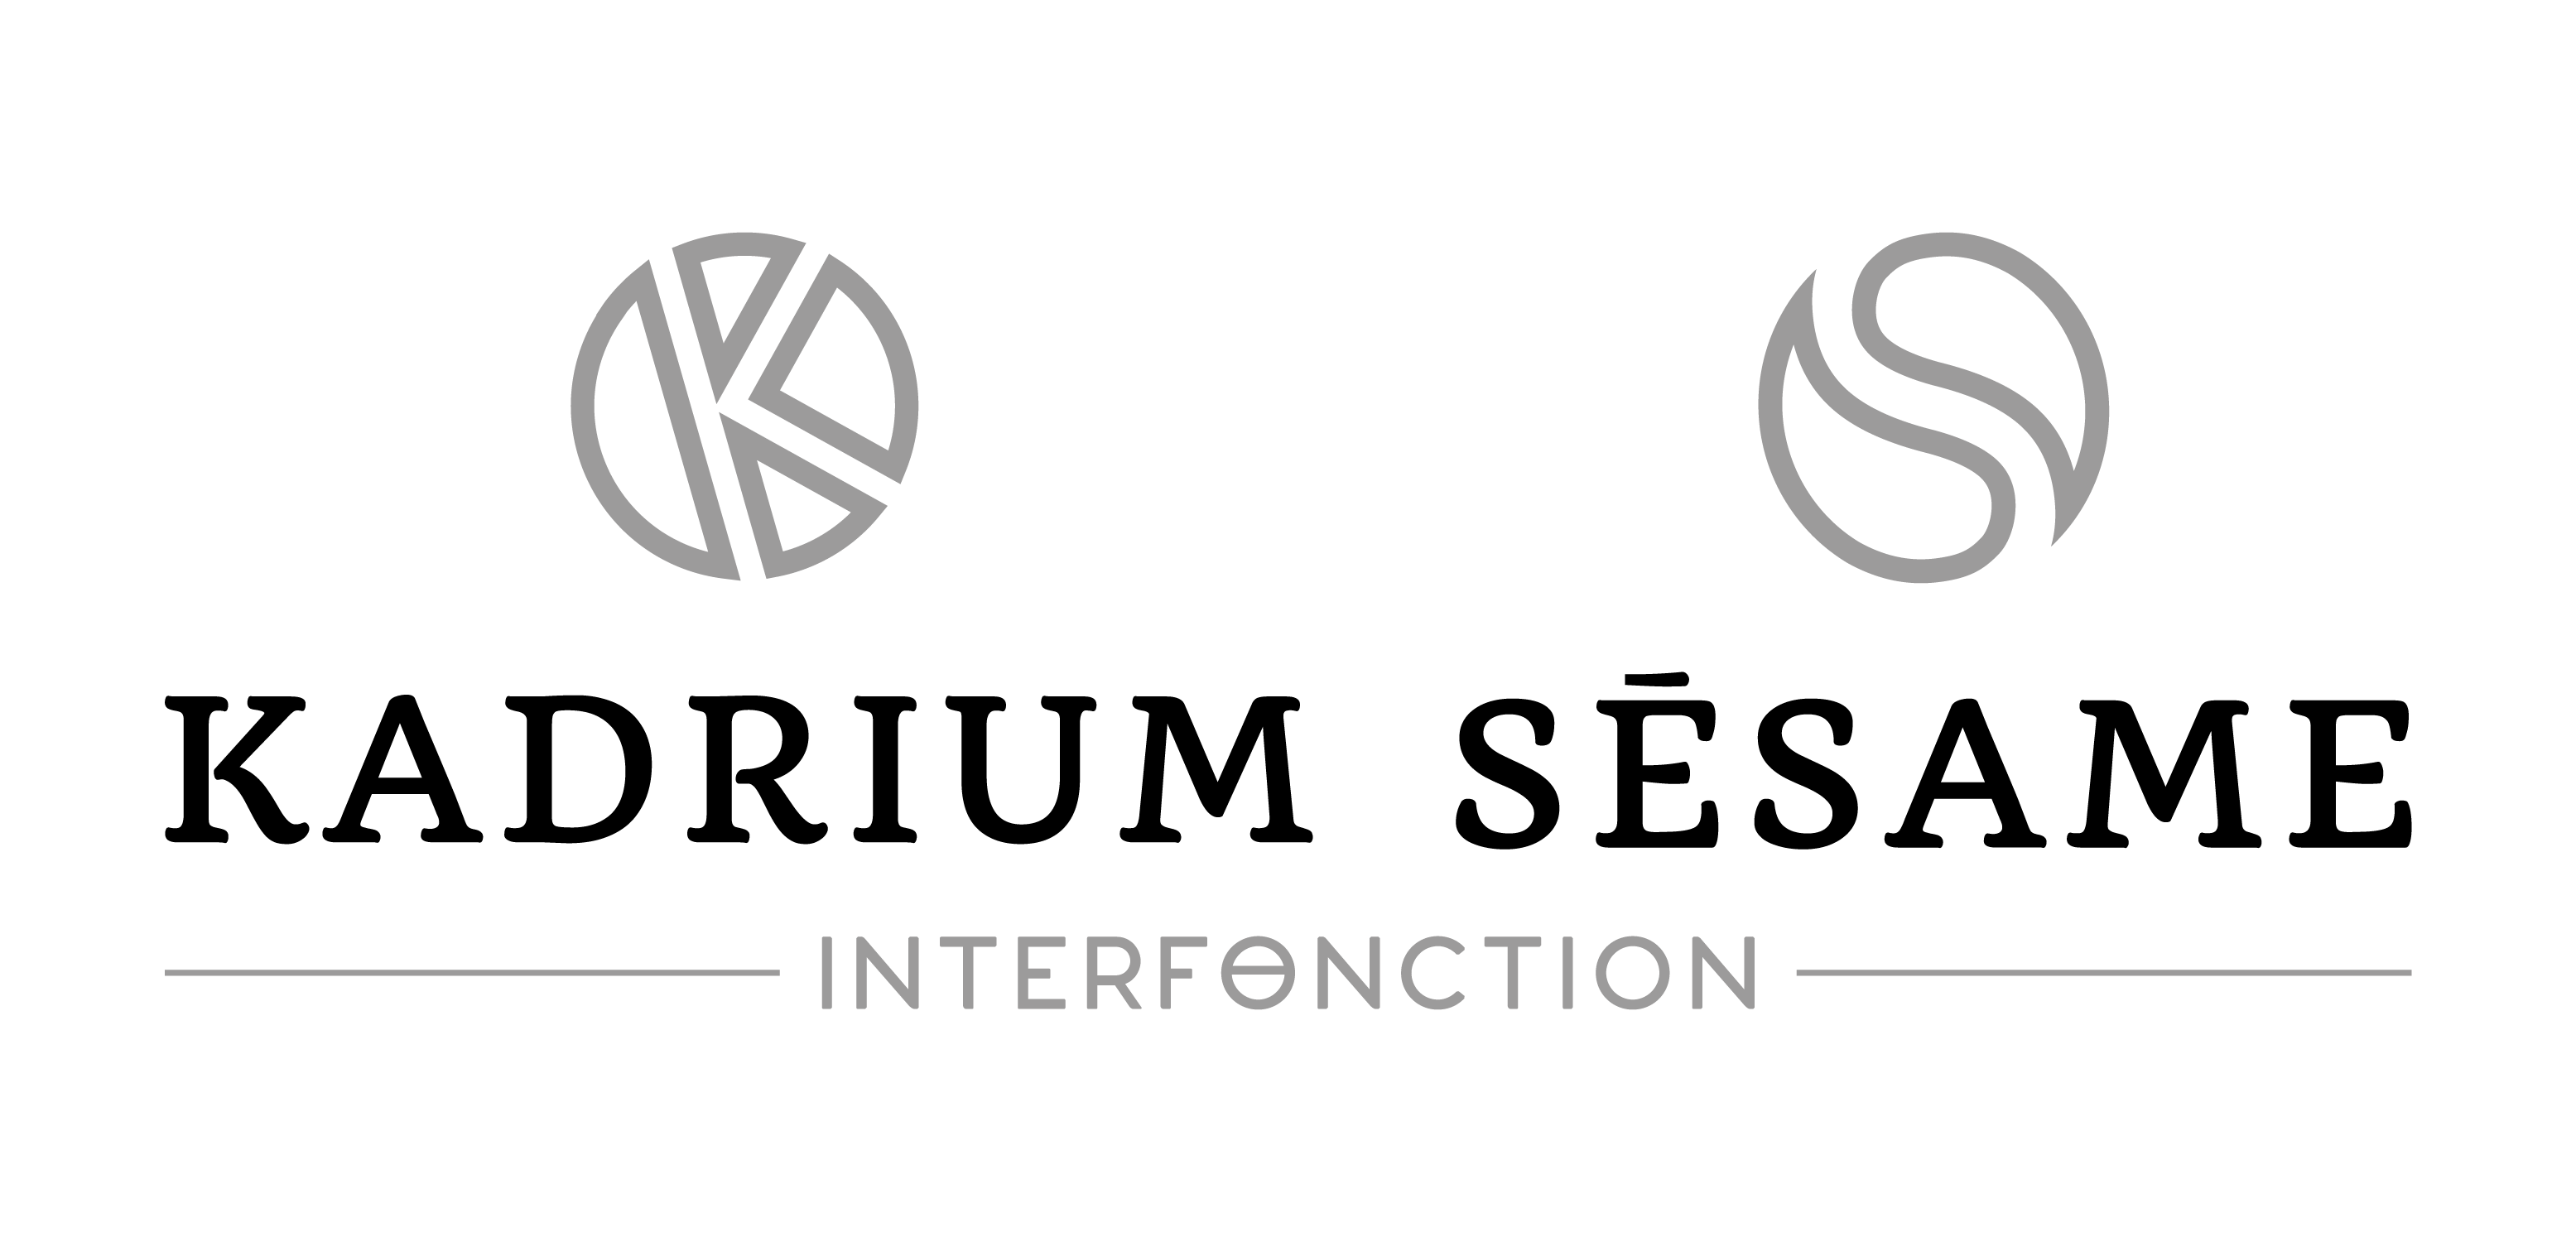 05_Interfonction